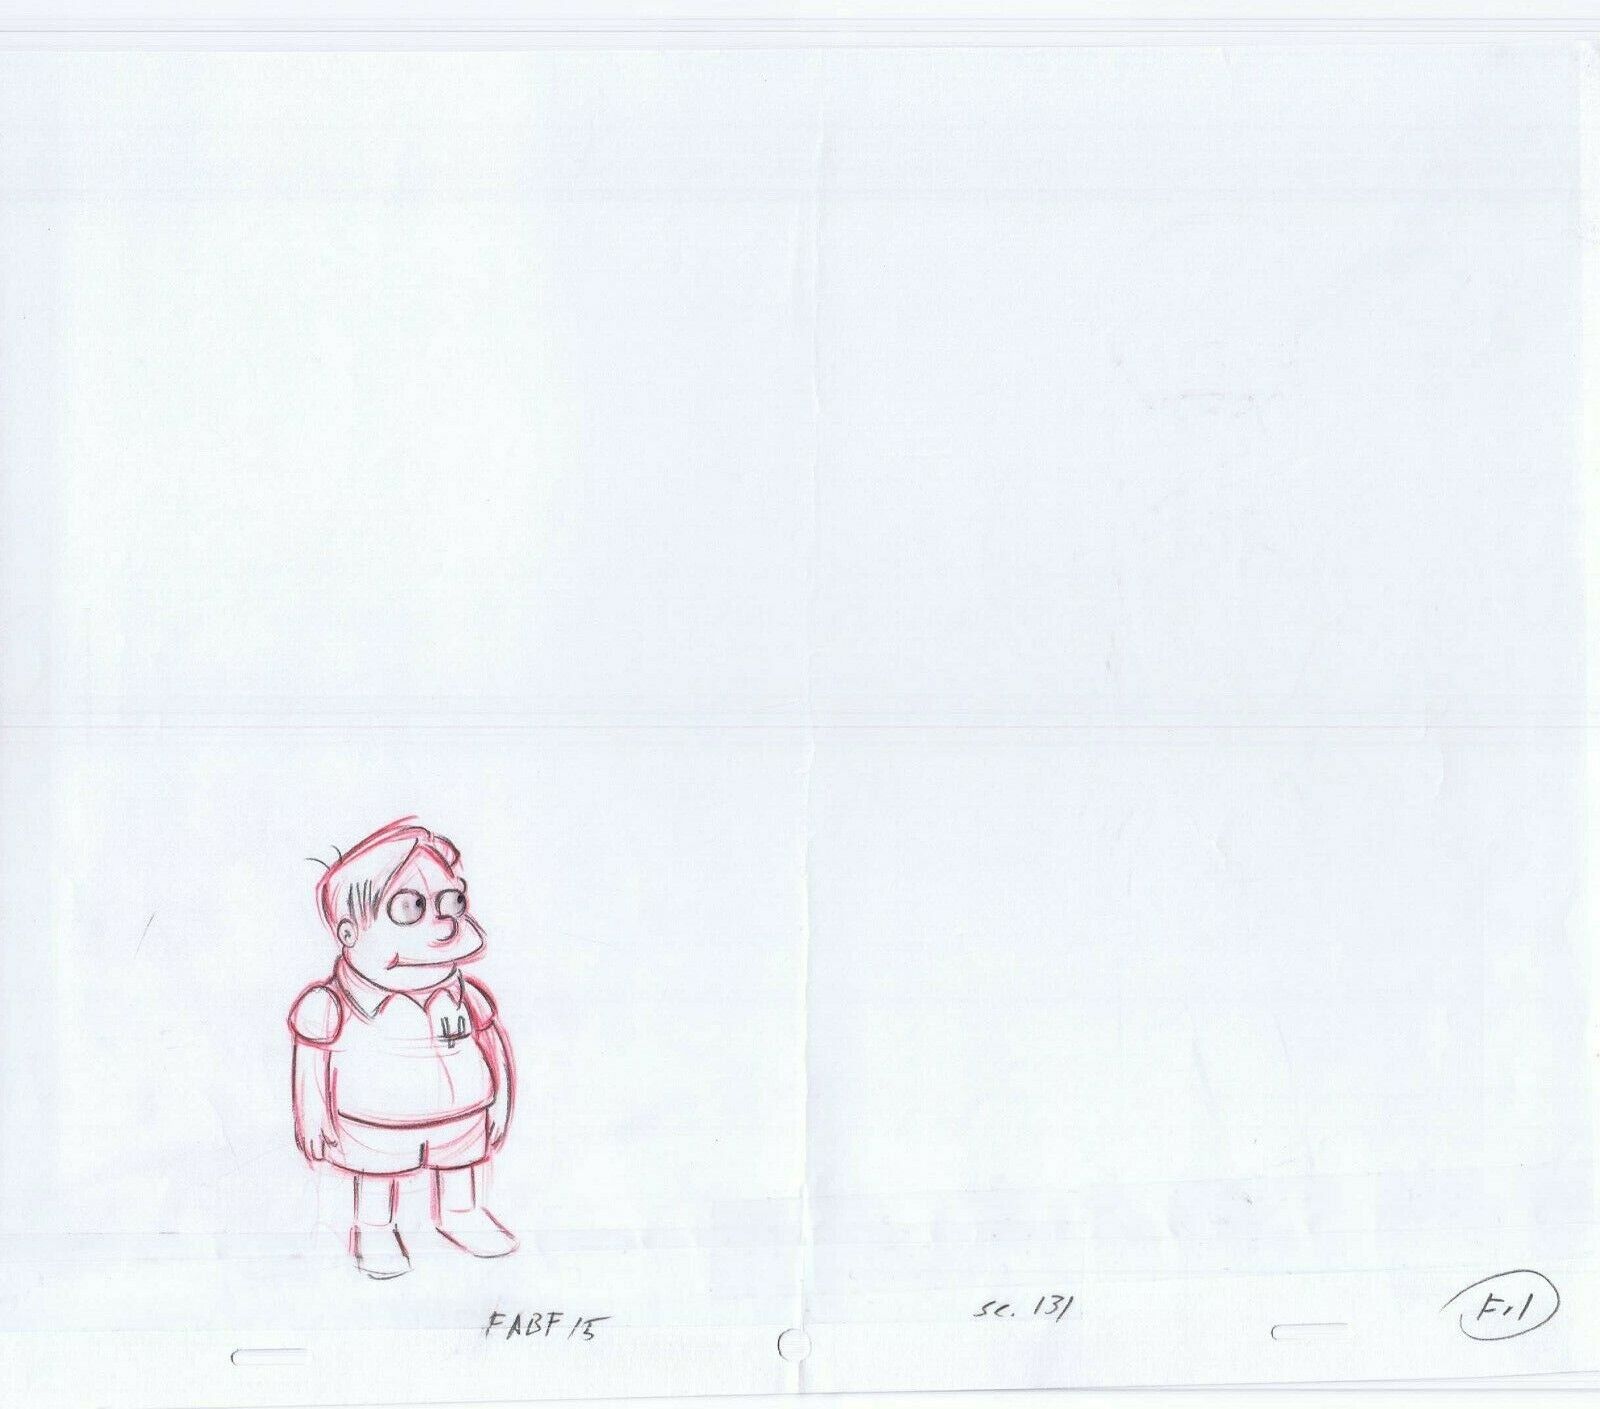 Simpsons Martin Original Art Animation Production Pencils FABF15 SC-131 F-1